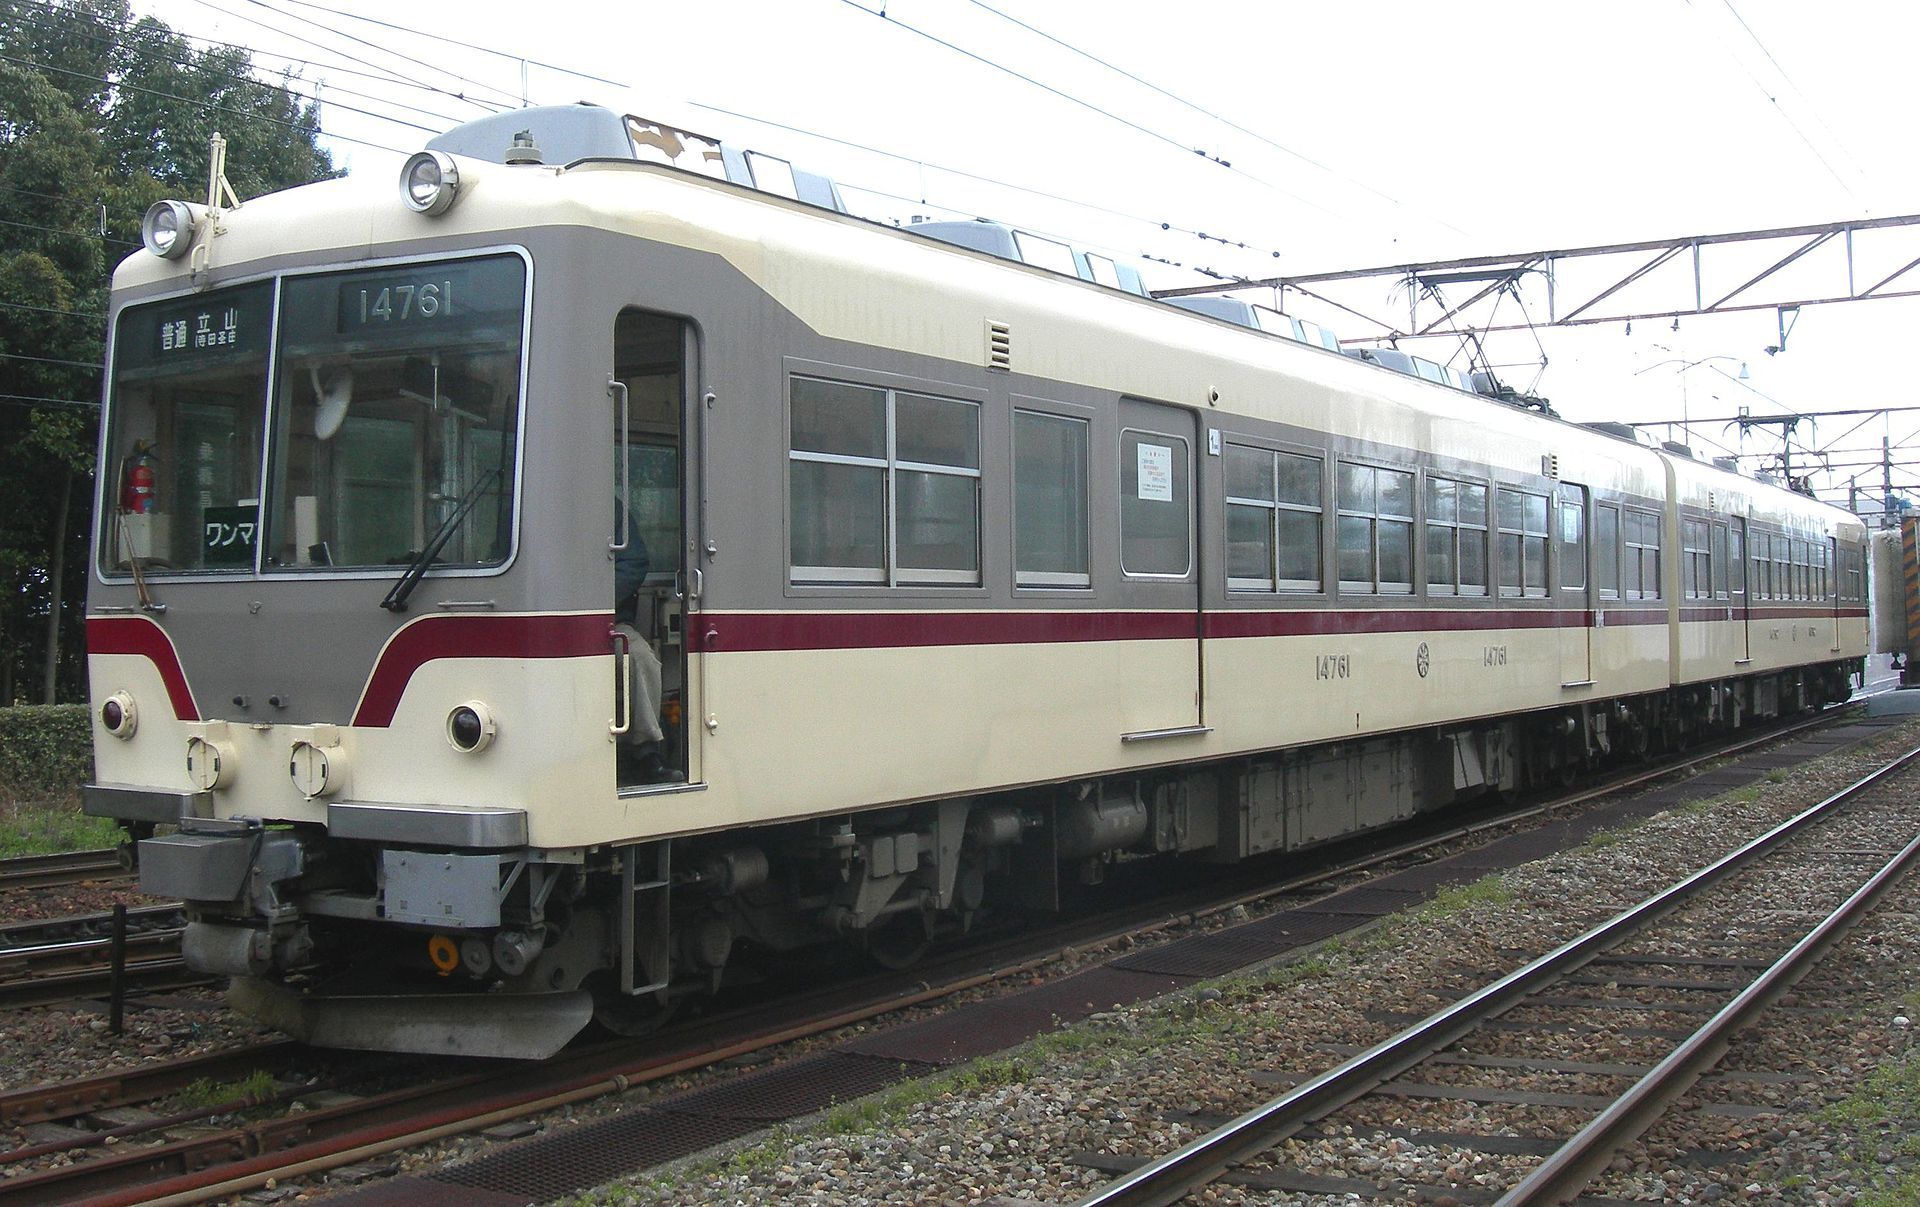 Toyama-chihou-railway-14761.jpg